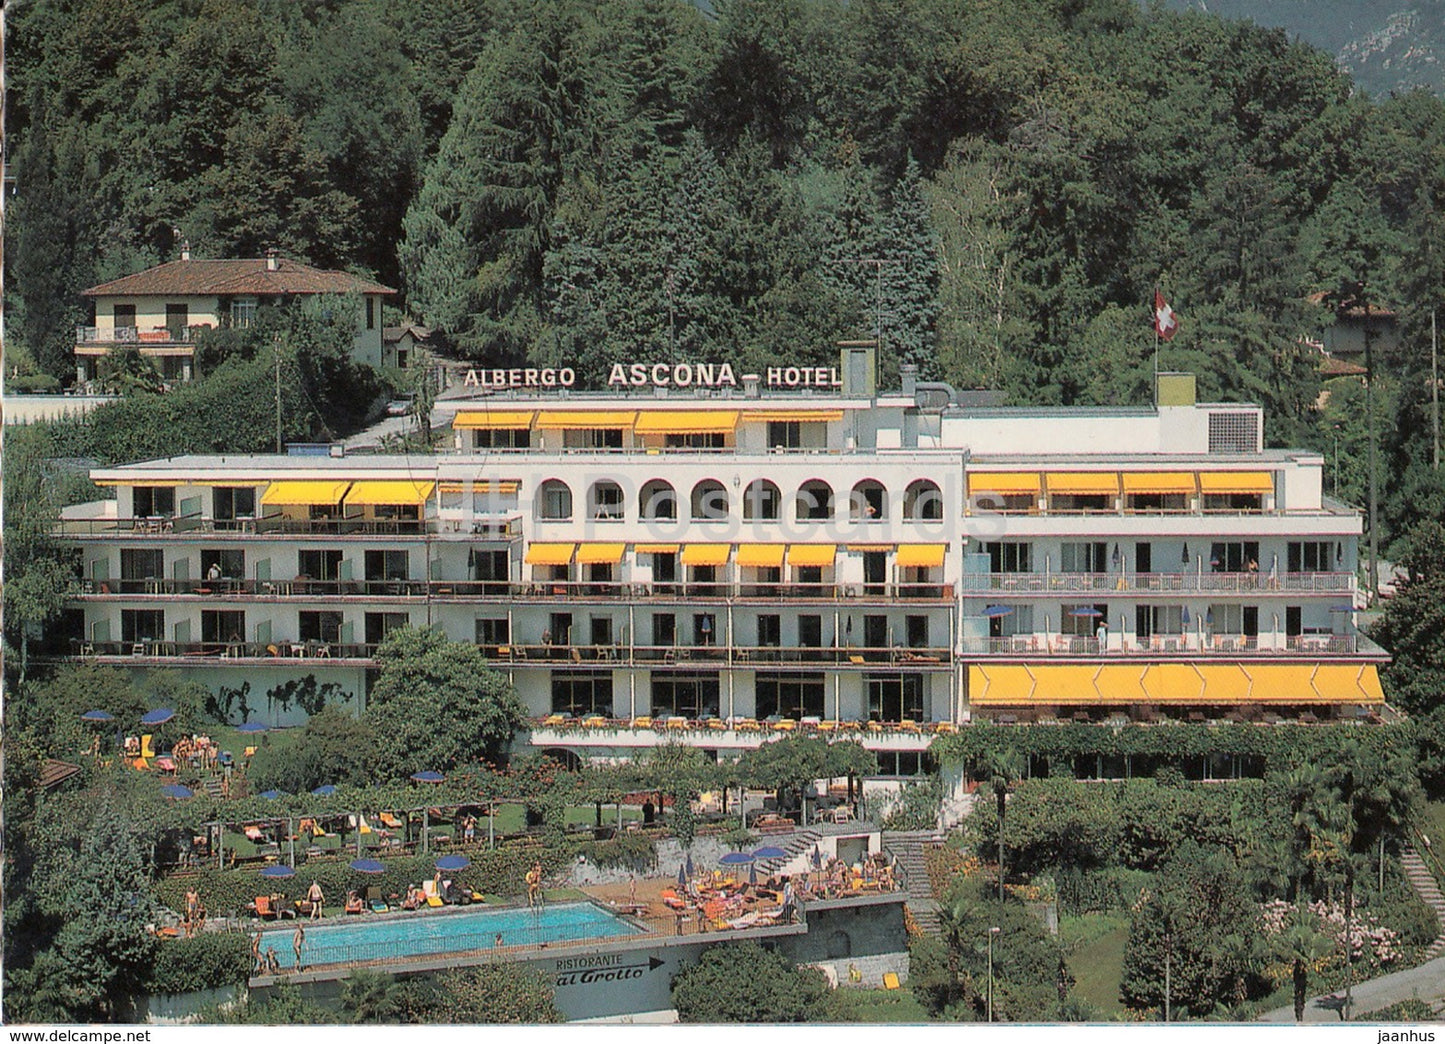 Albergo Ascona - Collina Monte Verita - hotel - Switzerland - 1996 - used - JH Postcards